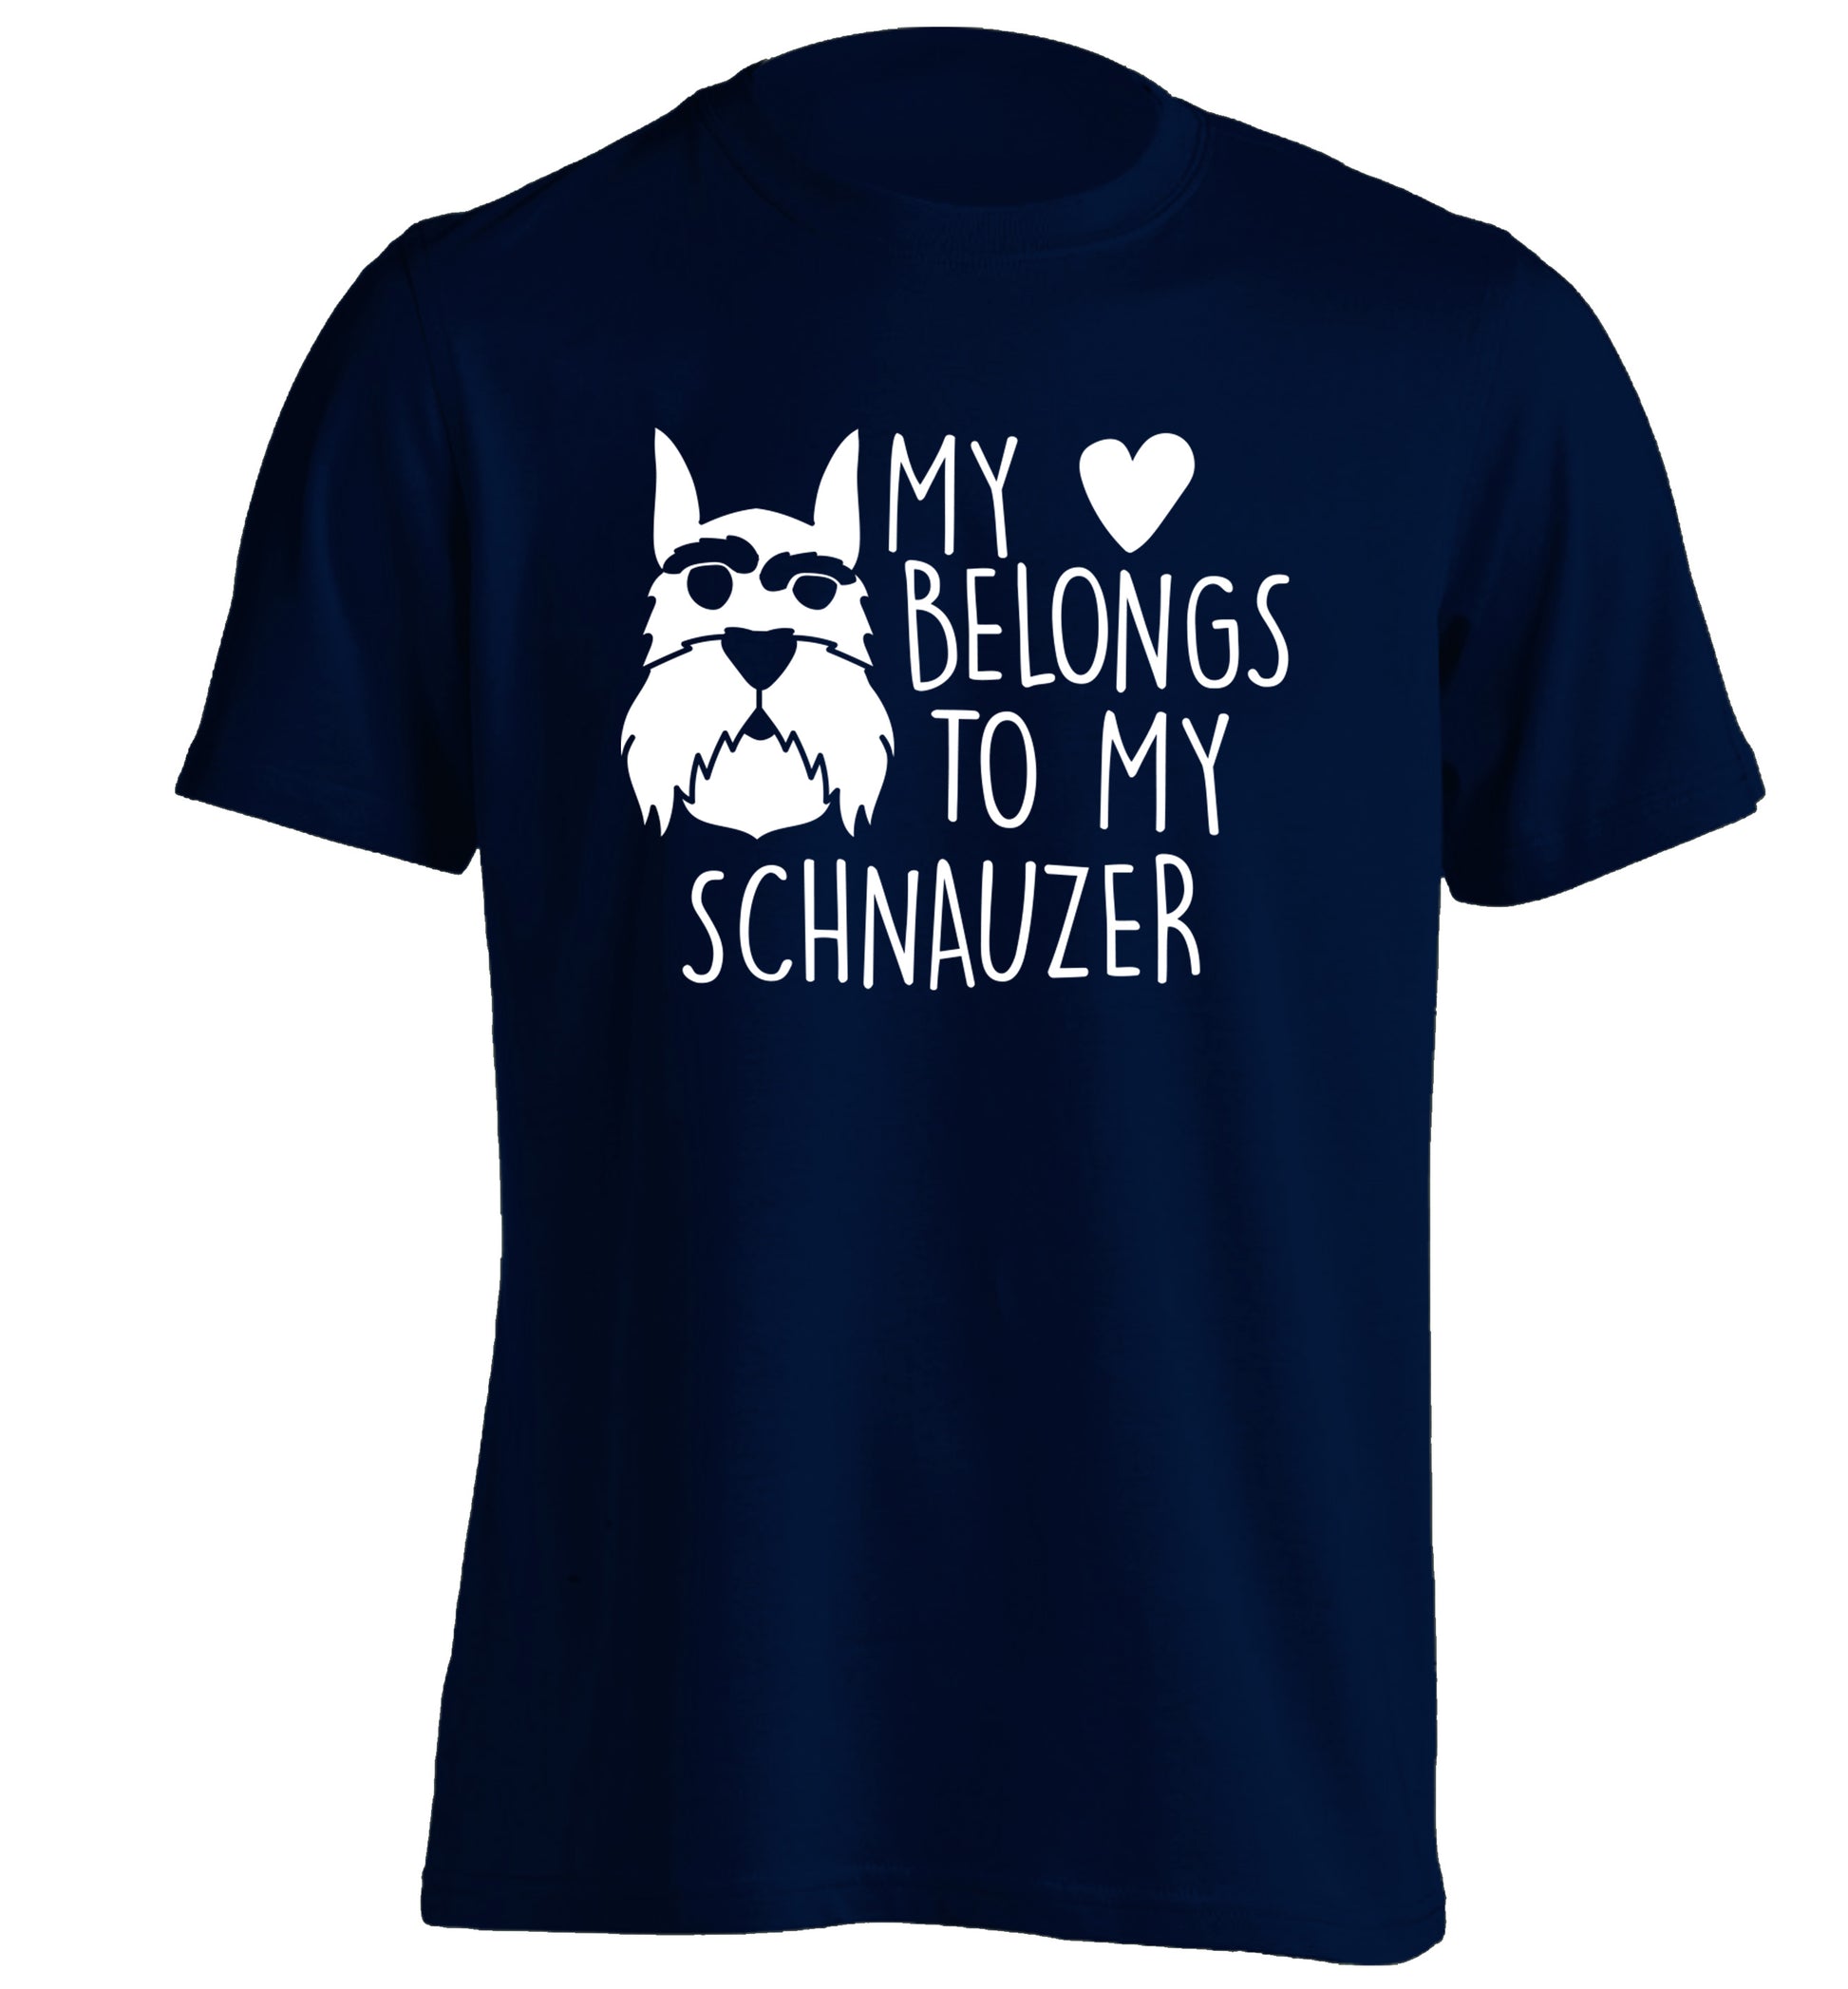 My heart belongs to my schnauzer adults unisex navy Tshirt 2XL